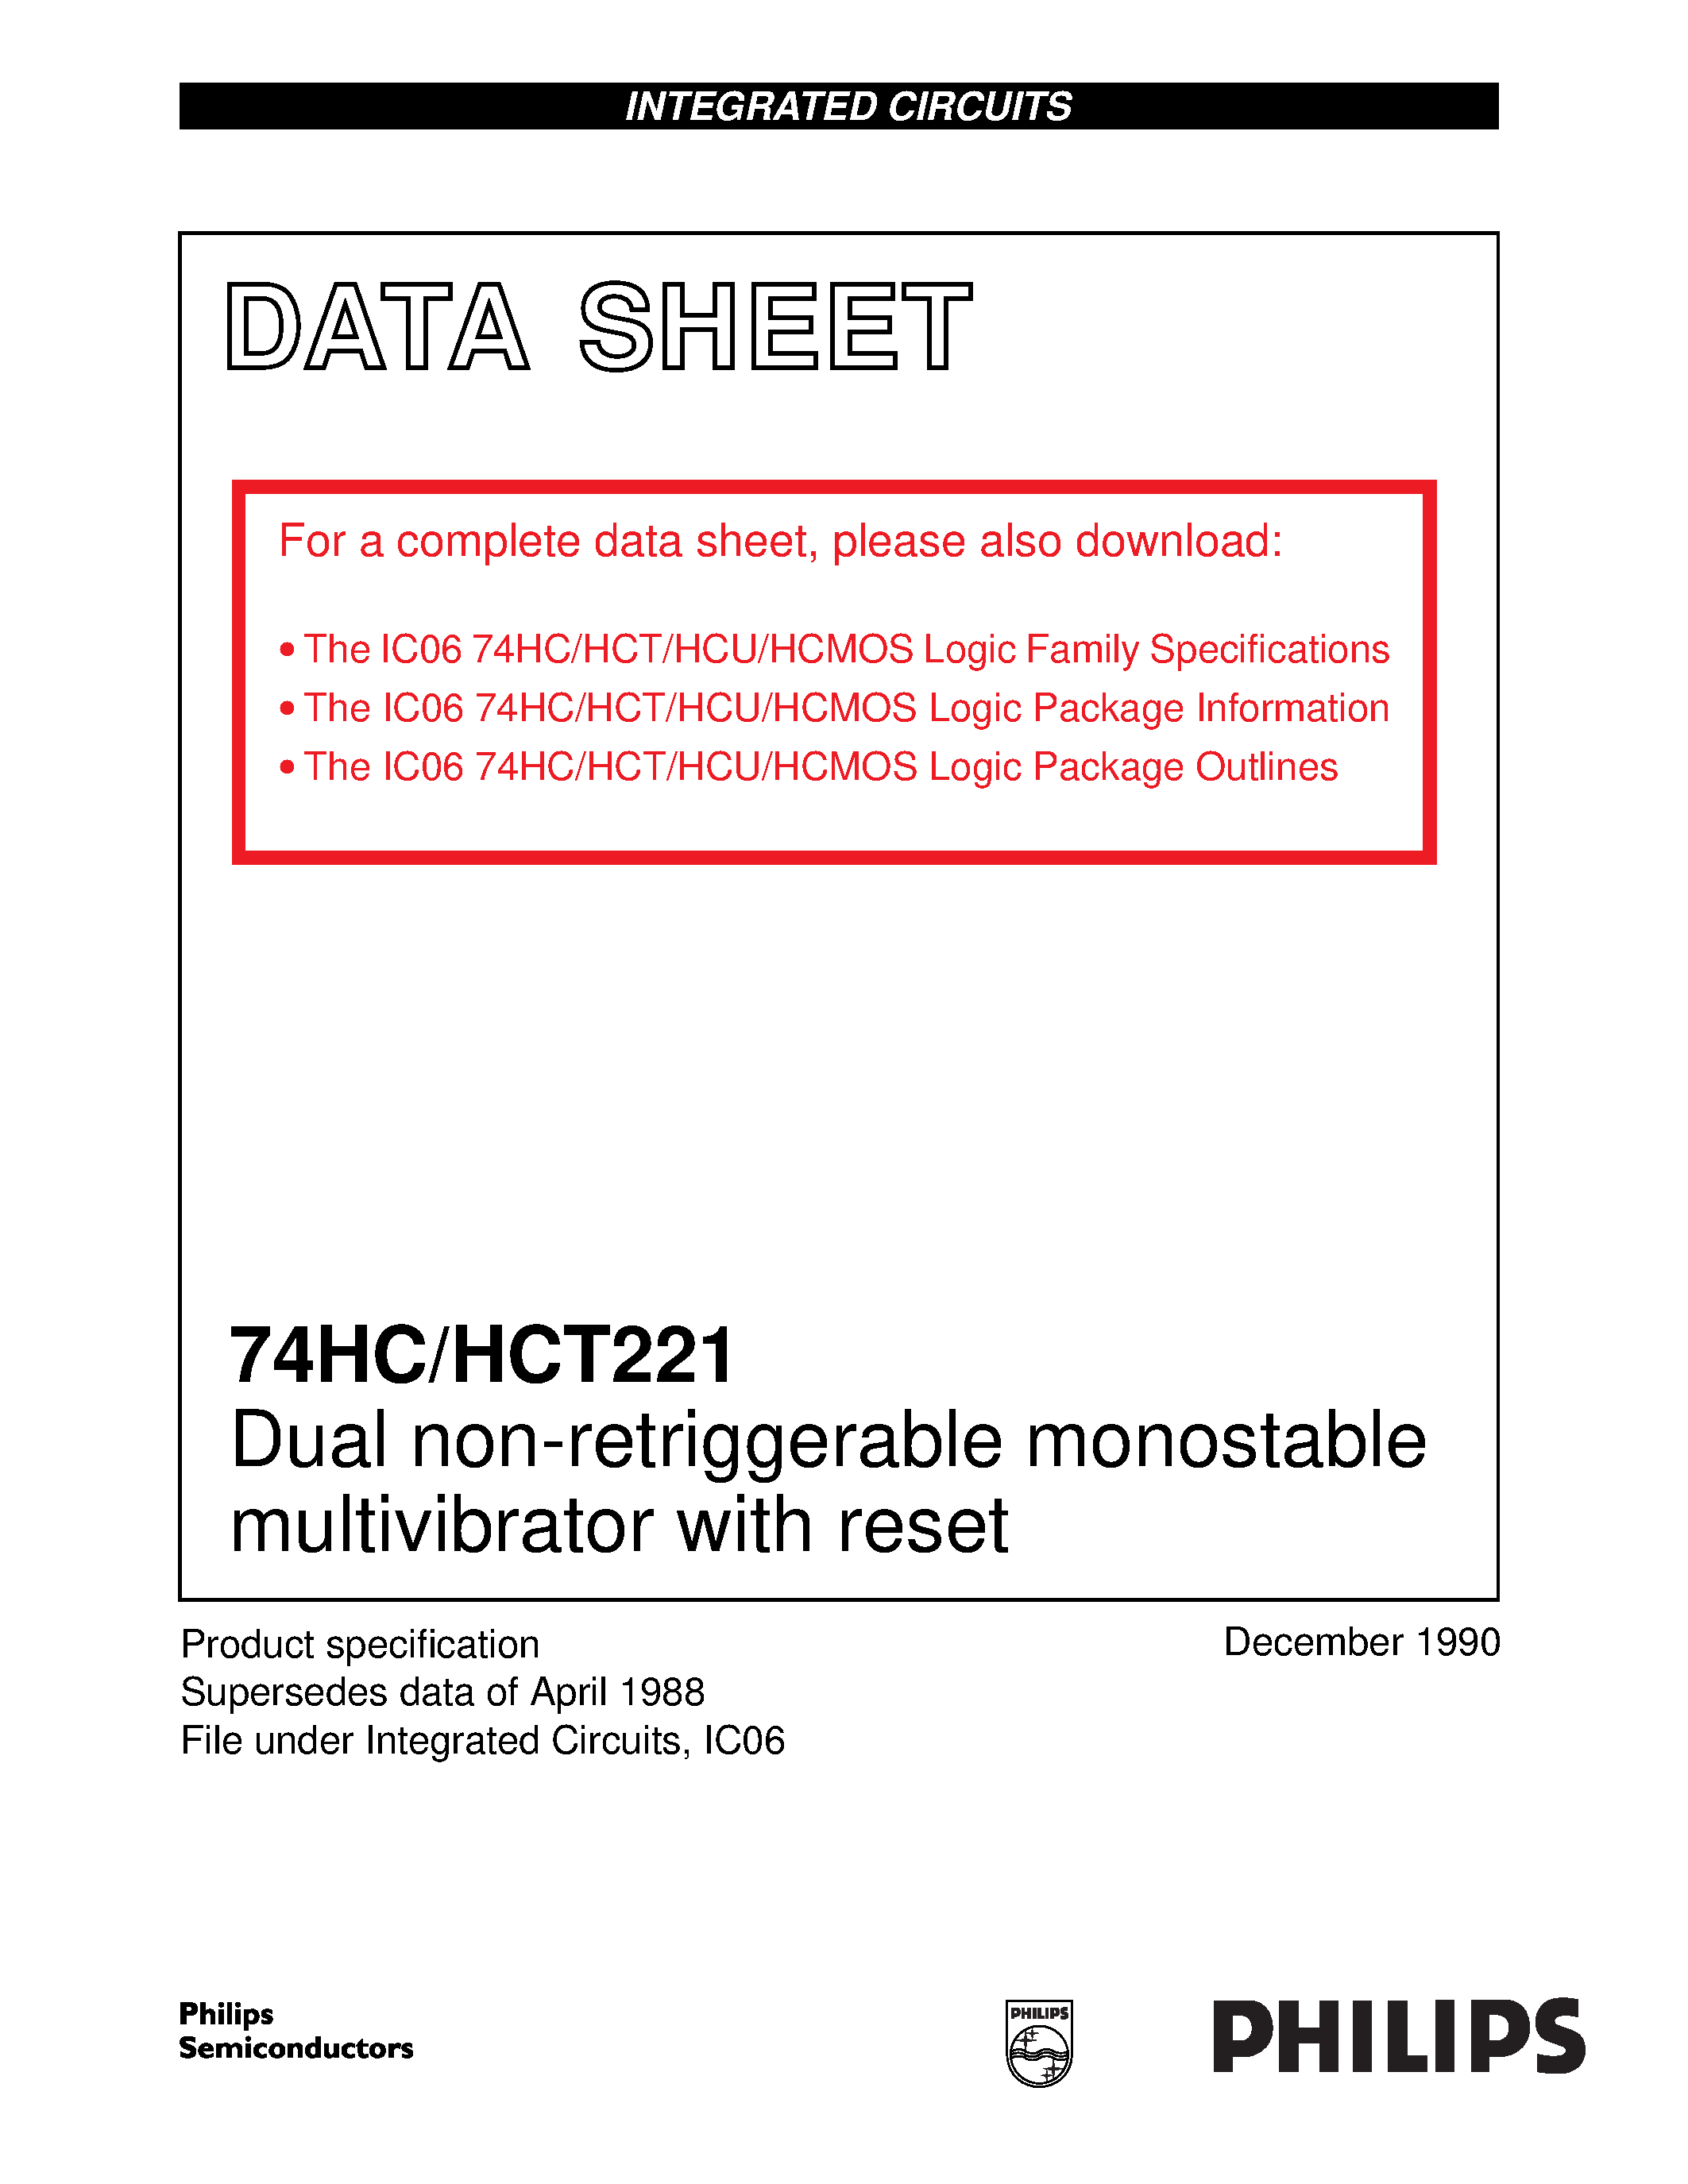 Datasheet 74221 - Dual non-retriggerable monostable multivibrator with reset page 1